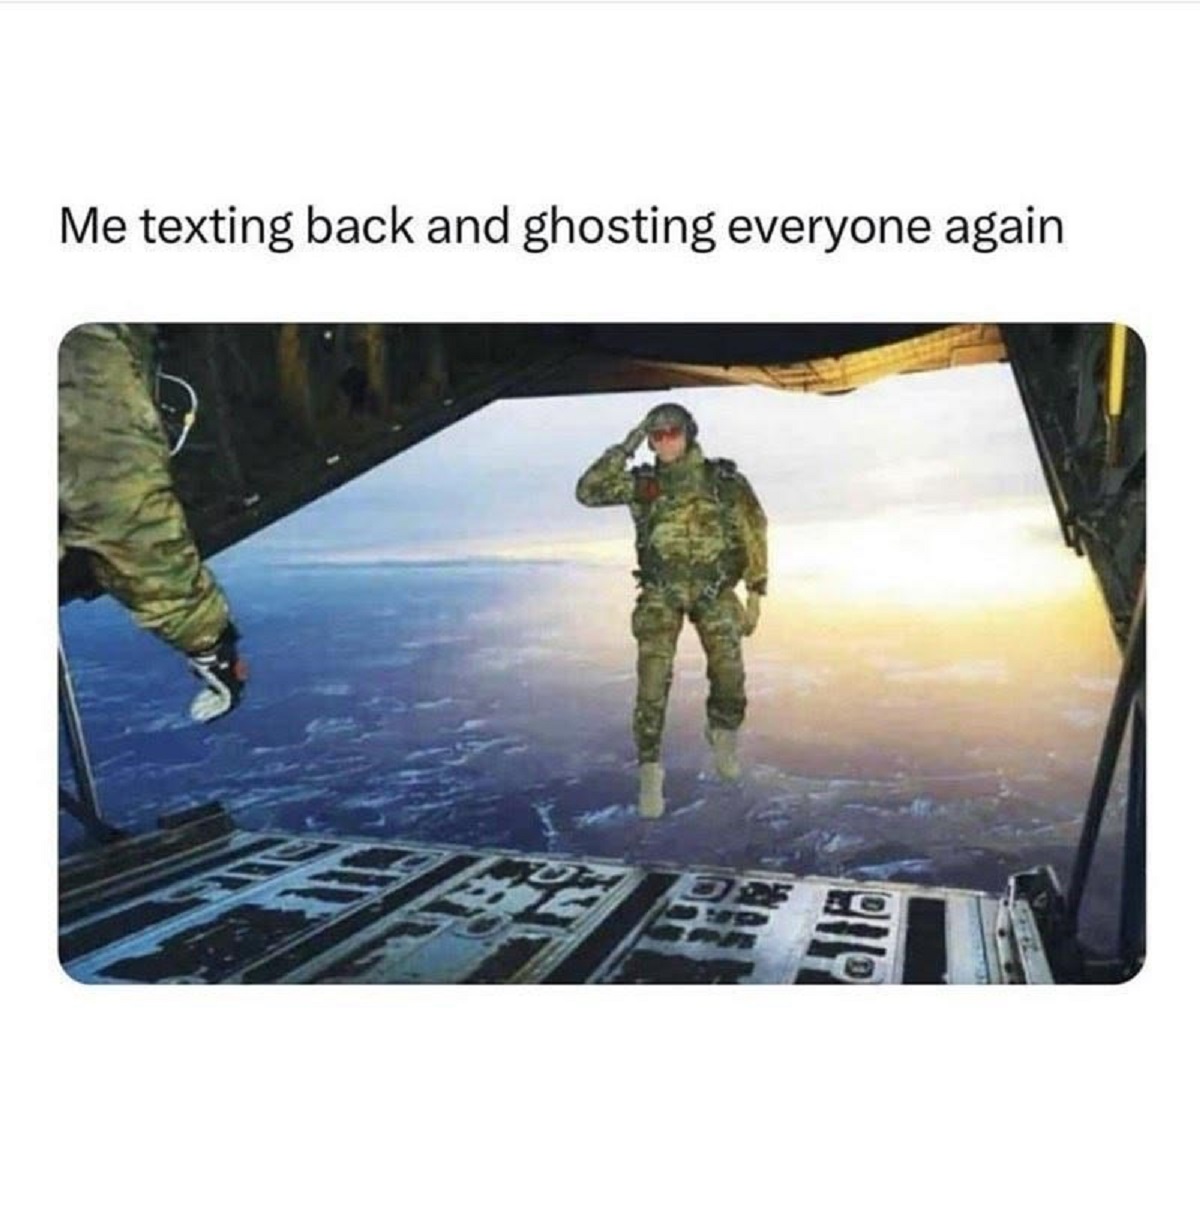 me ghosting everyone meme - Me texting back and ghosting everyone again